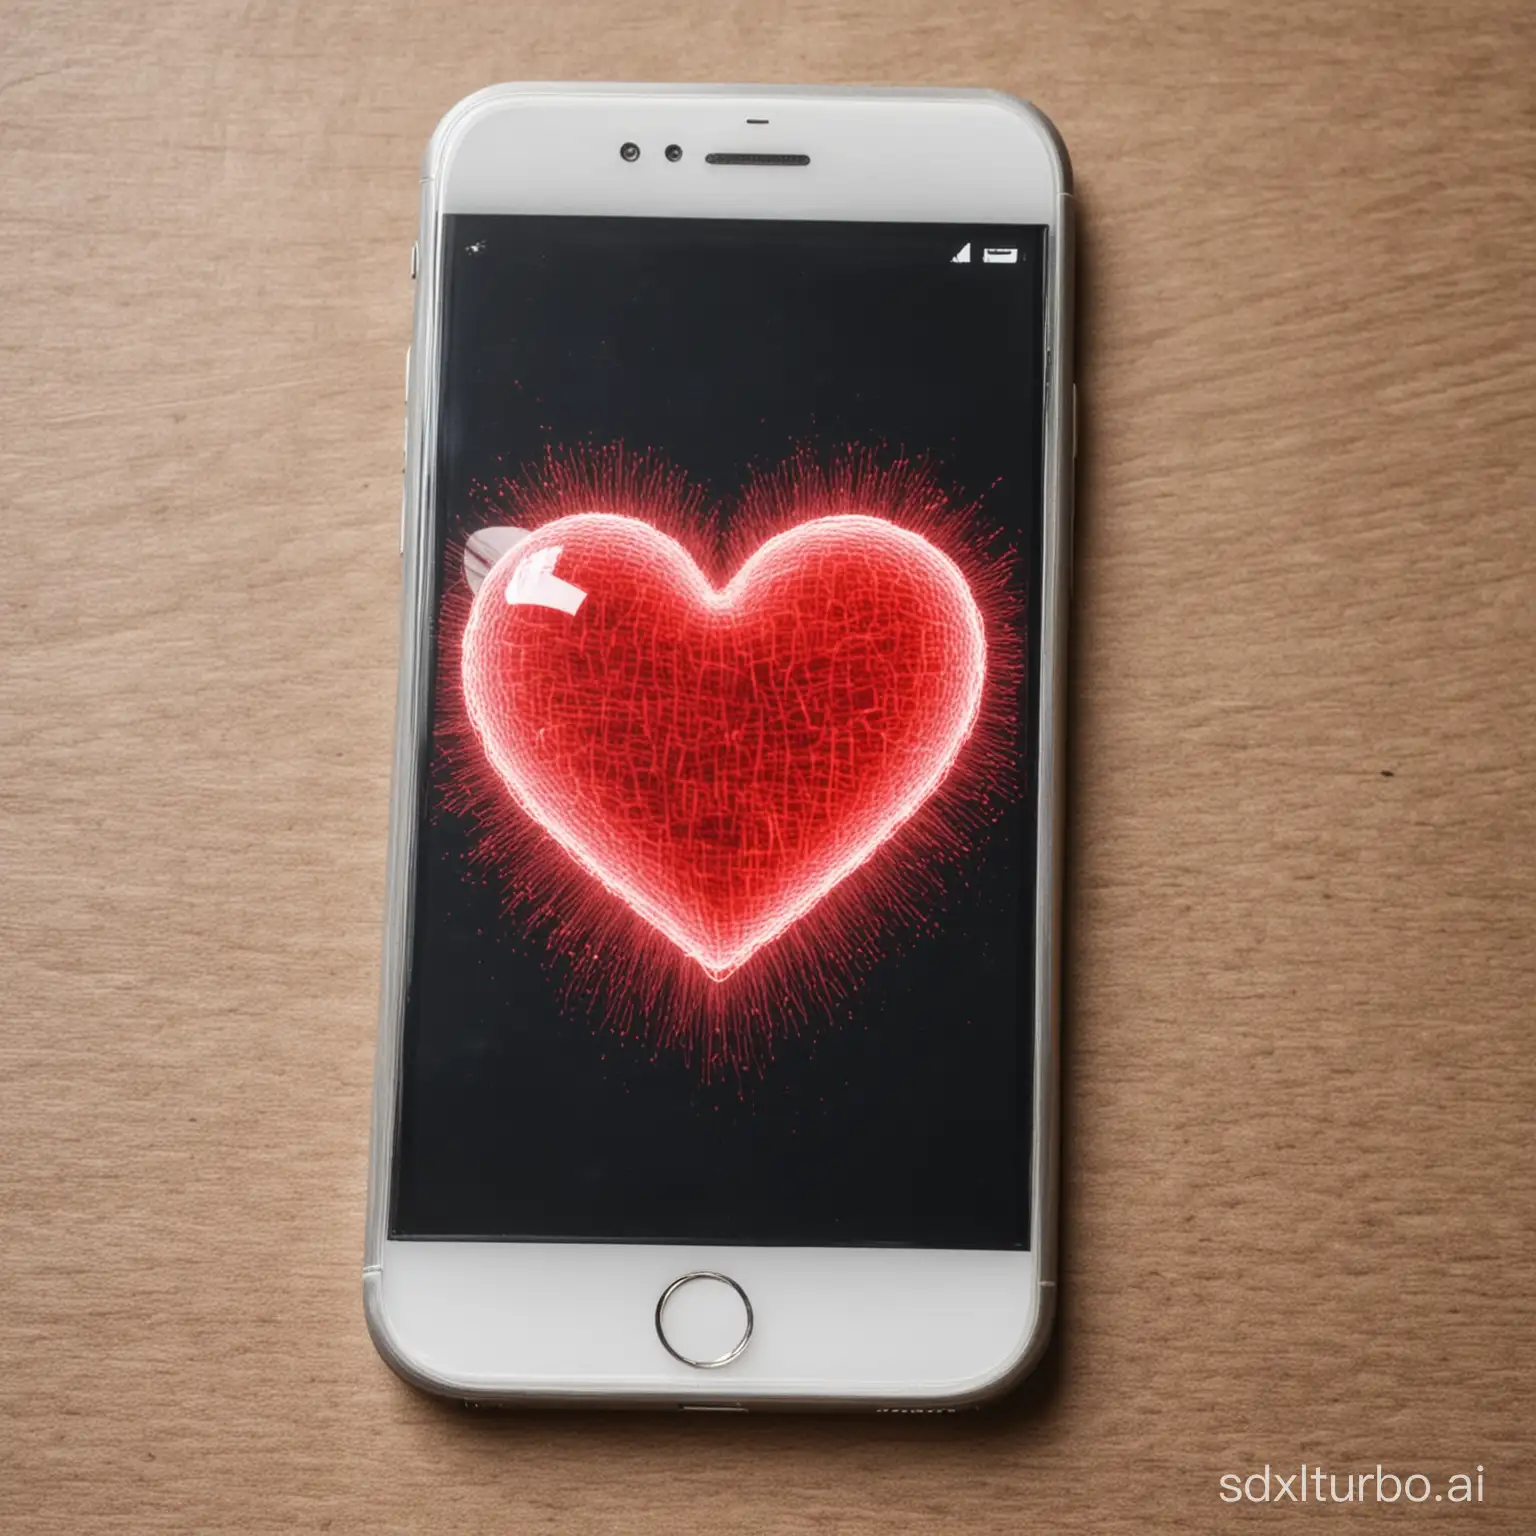 Heart on a smartphone screen